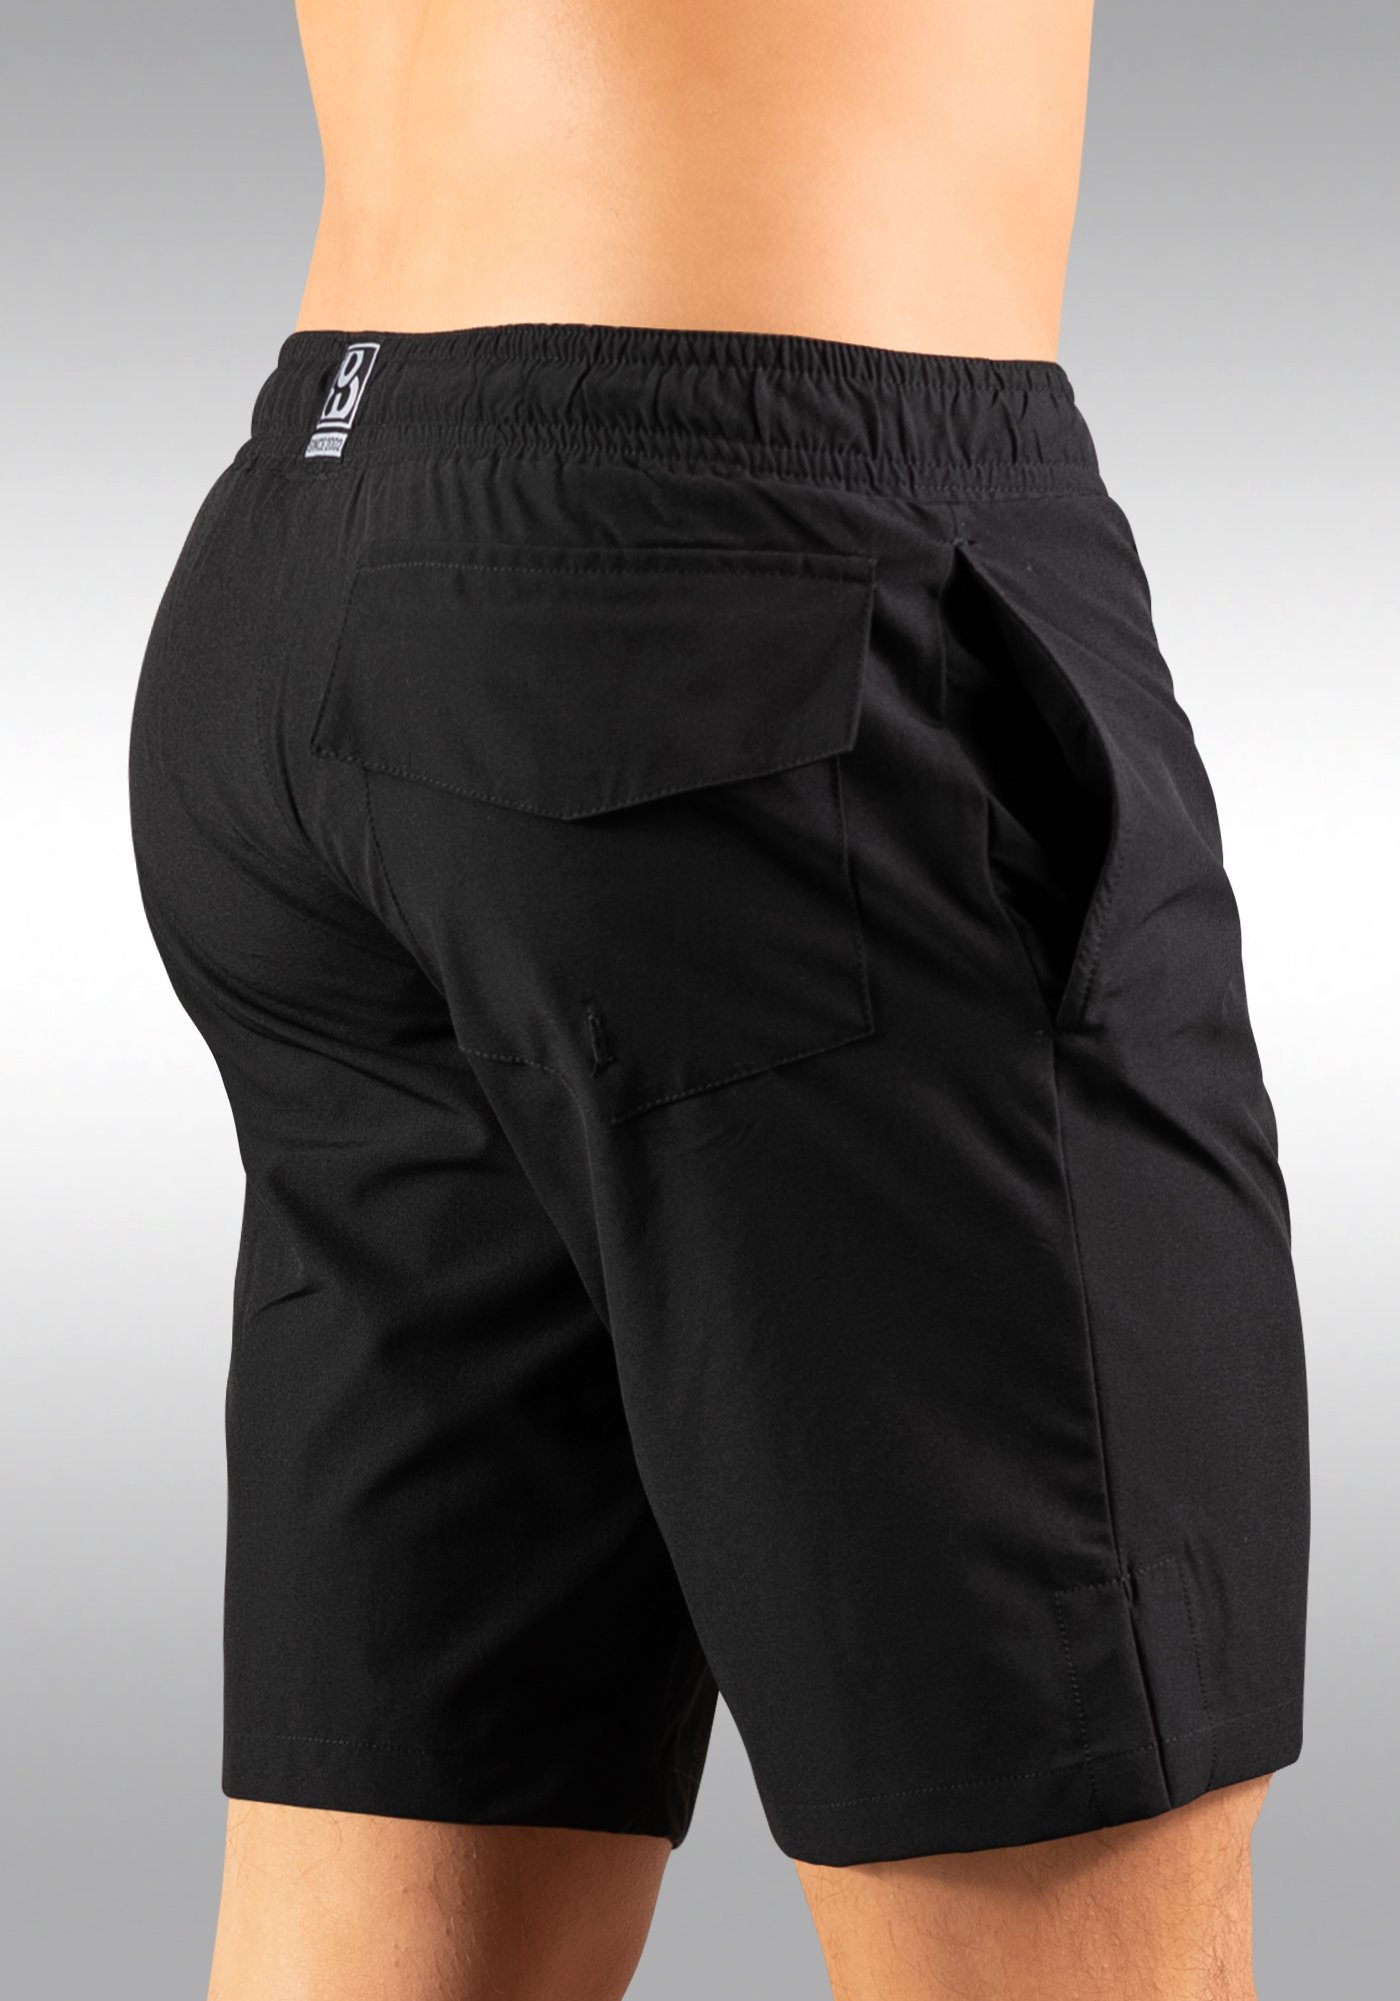 Ergowear GYM & Swim Short with Built-In X4D Thong Black